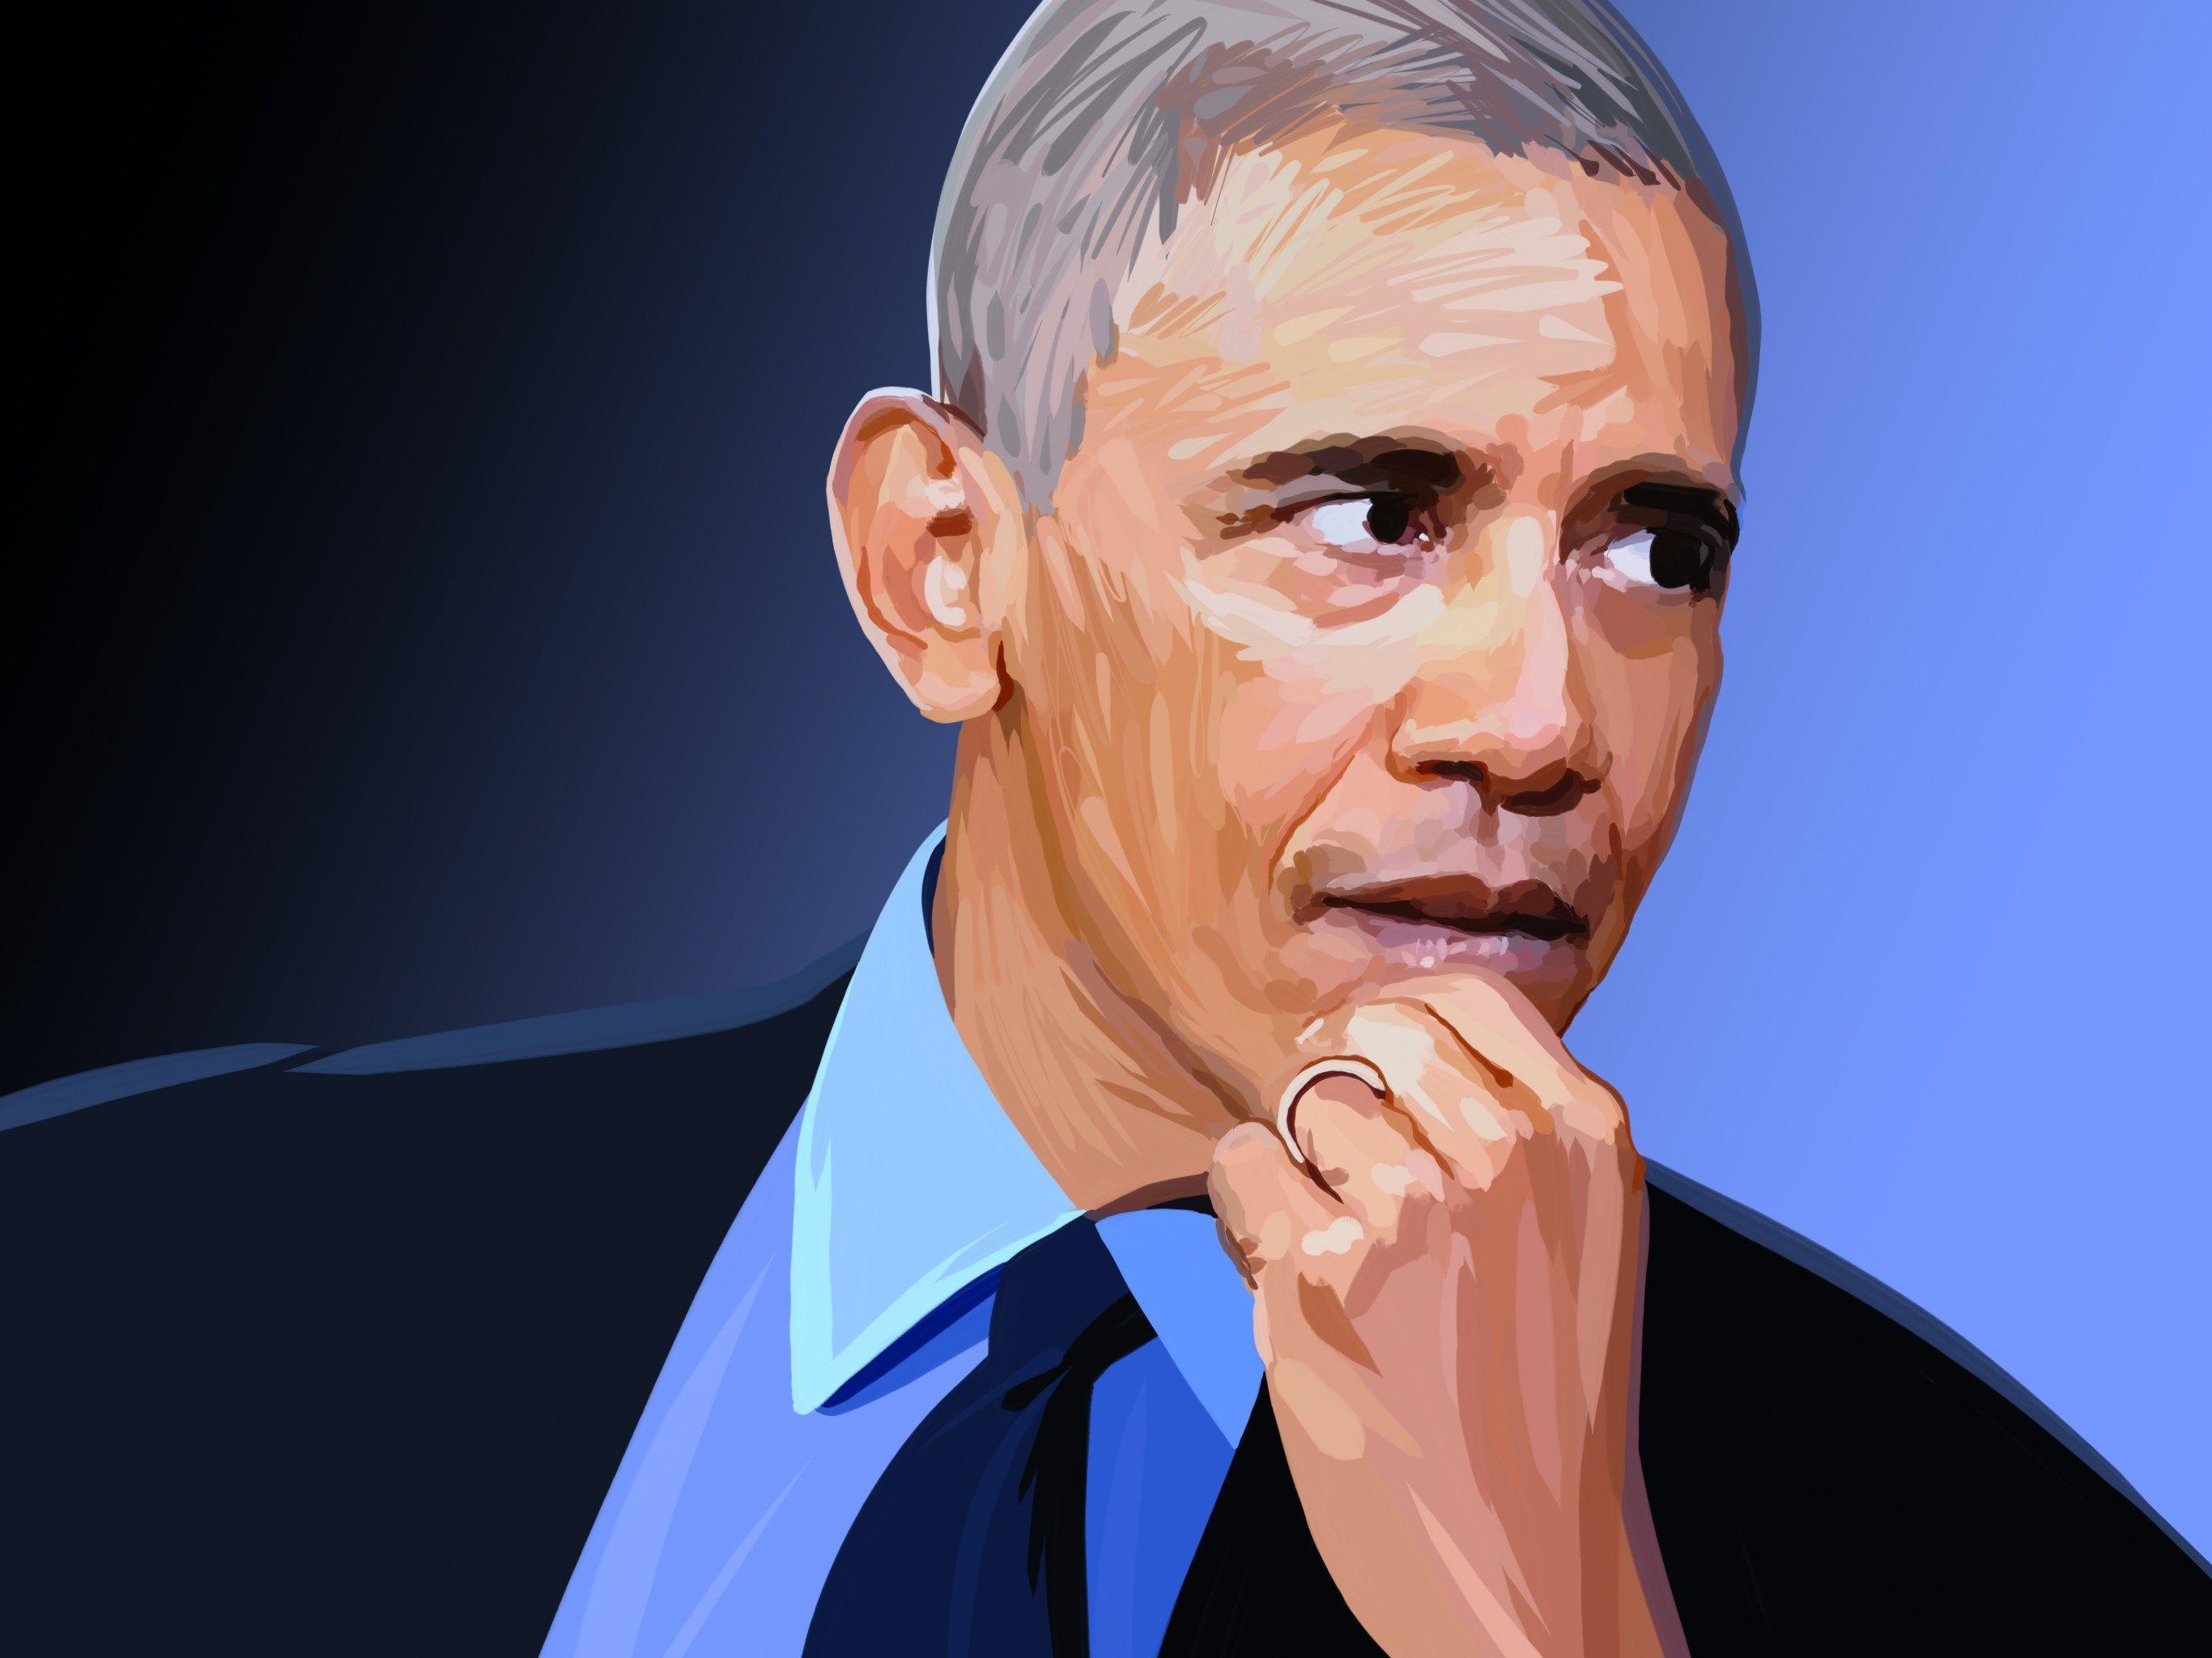 Barack Obama Pic Desktop, Regina Gill 2017 03 20